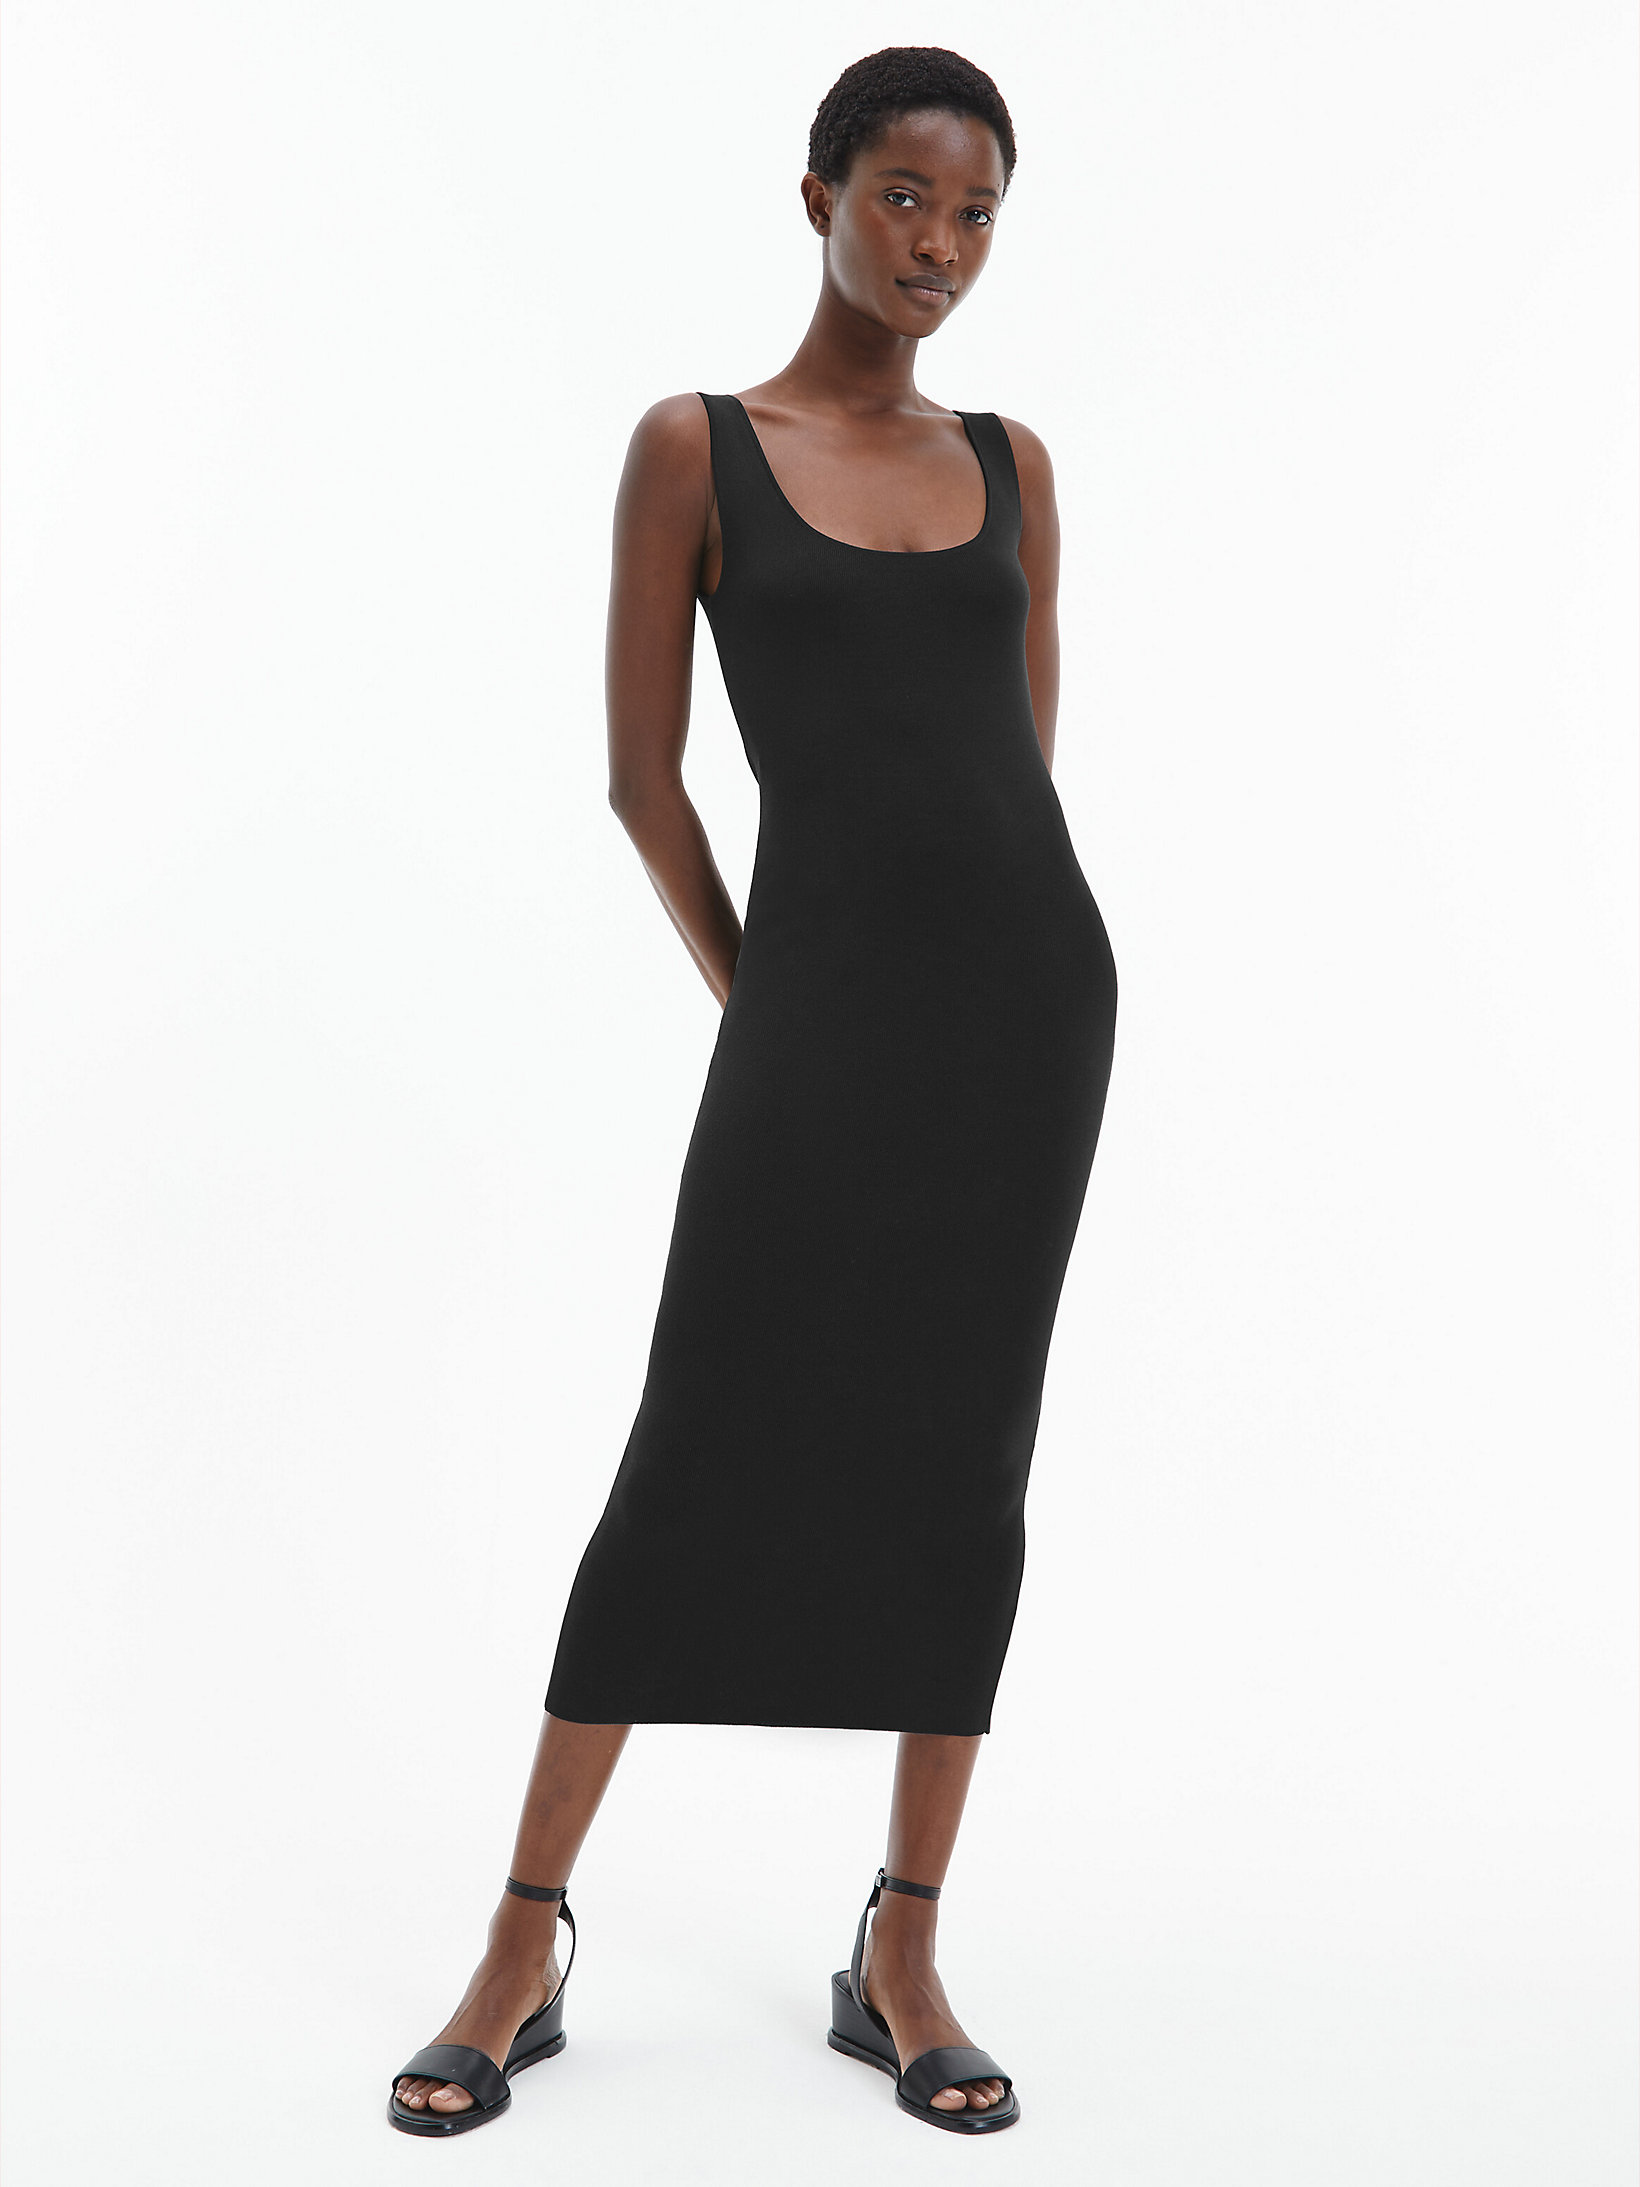 CK Black Bodycon Knit Tank Dress undefined women Calvin Klein